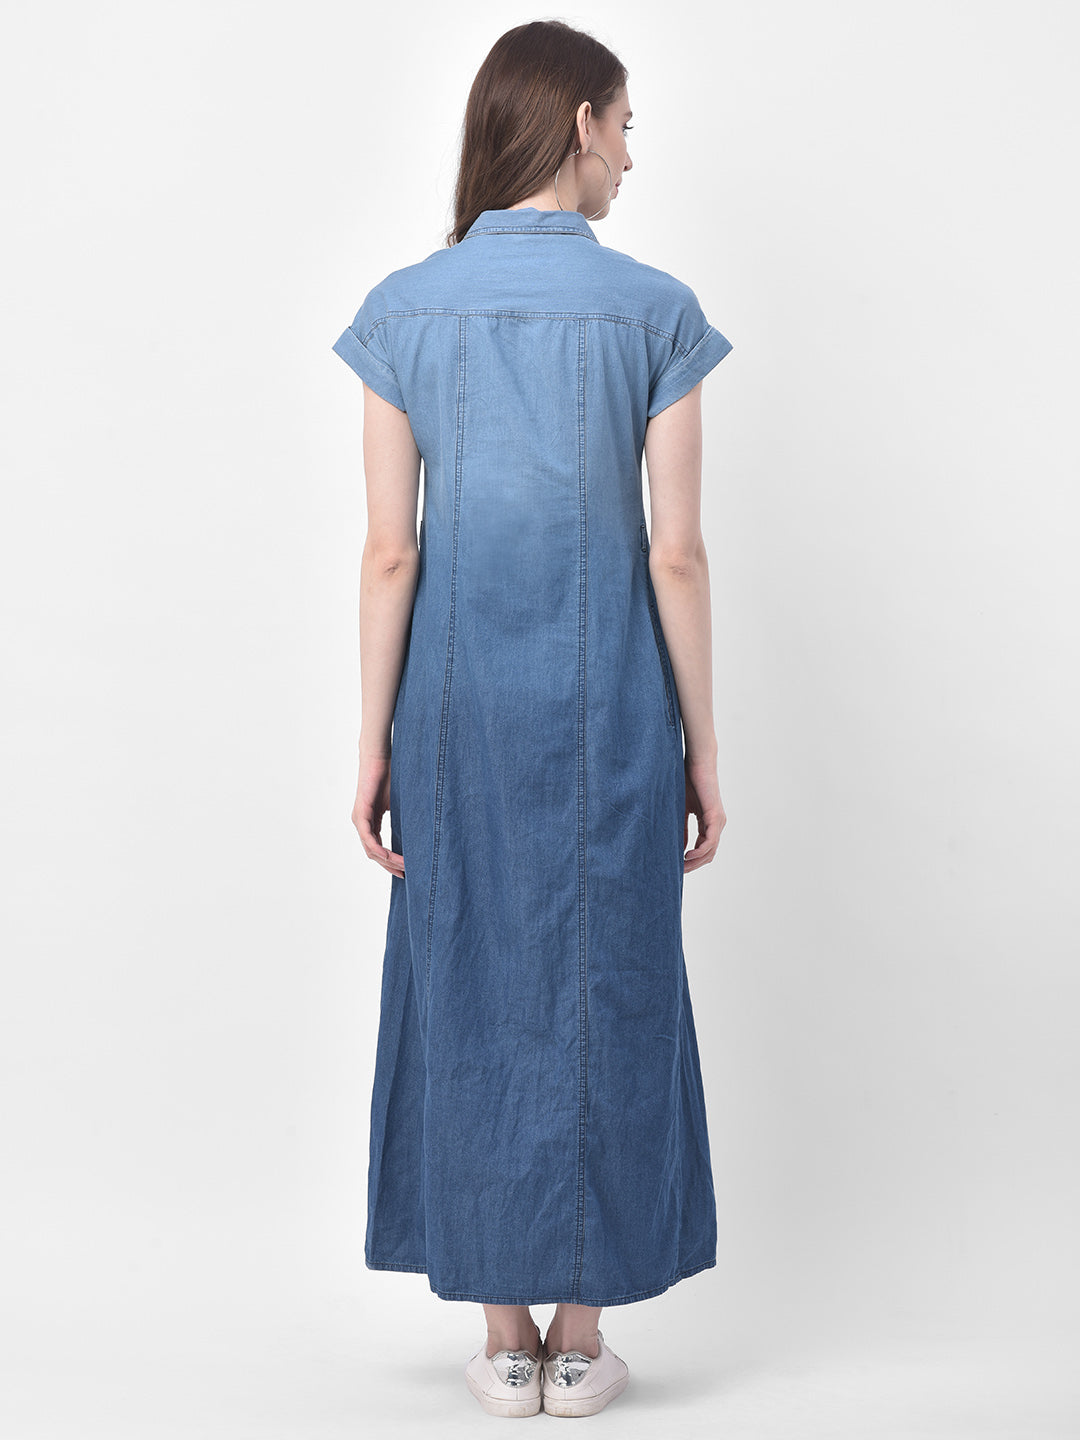 Marella ALARICO - Maxi dress - blue denim/blue - Zalando.de